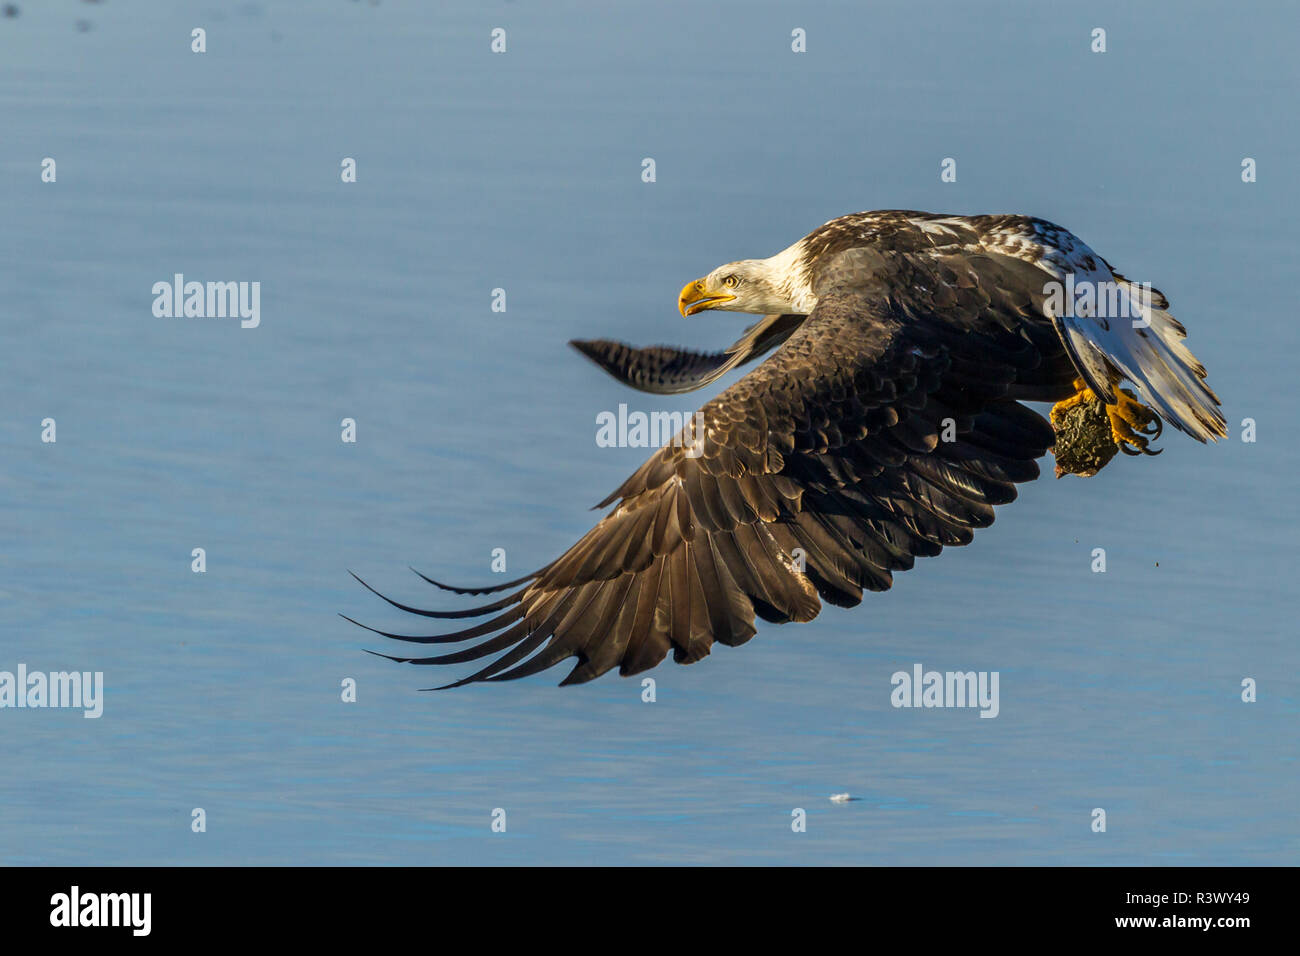 USA, Alaska, Chilkat Bald Eagle Preserve, bald eagle adult flying Stock Photo